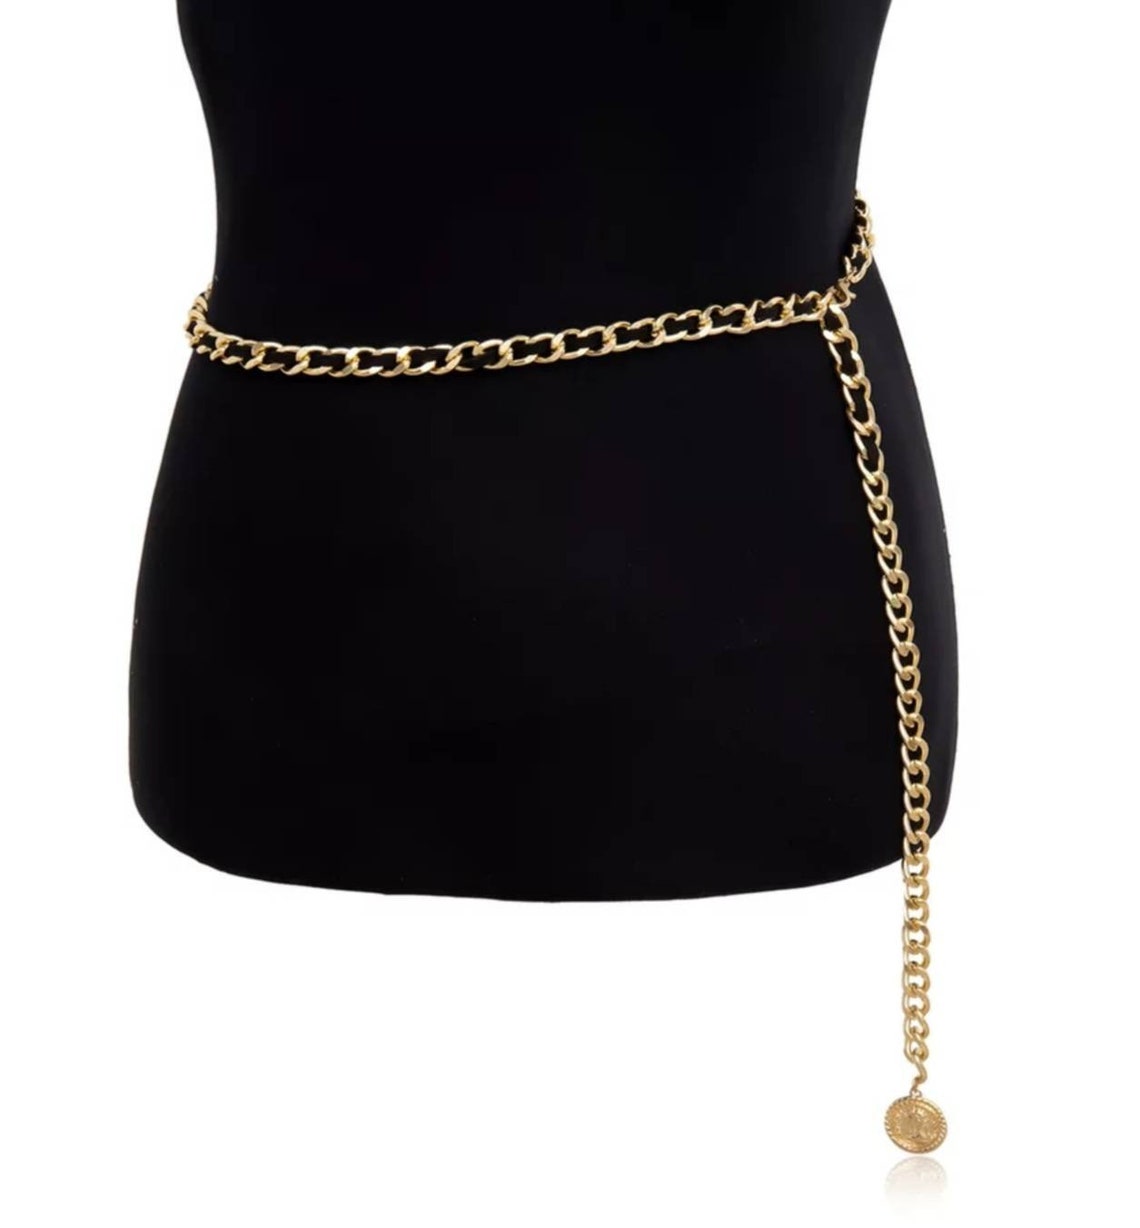 Gold Black Dress Belt. Skinny linked chain gold shirt dress | Etsy